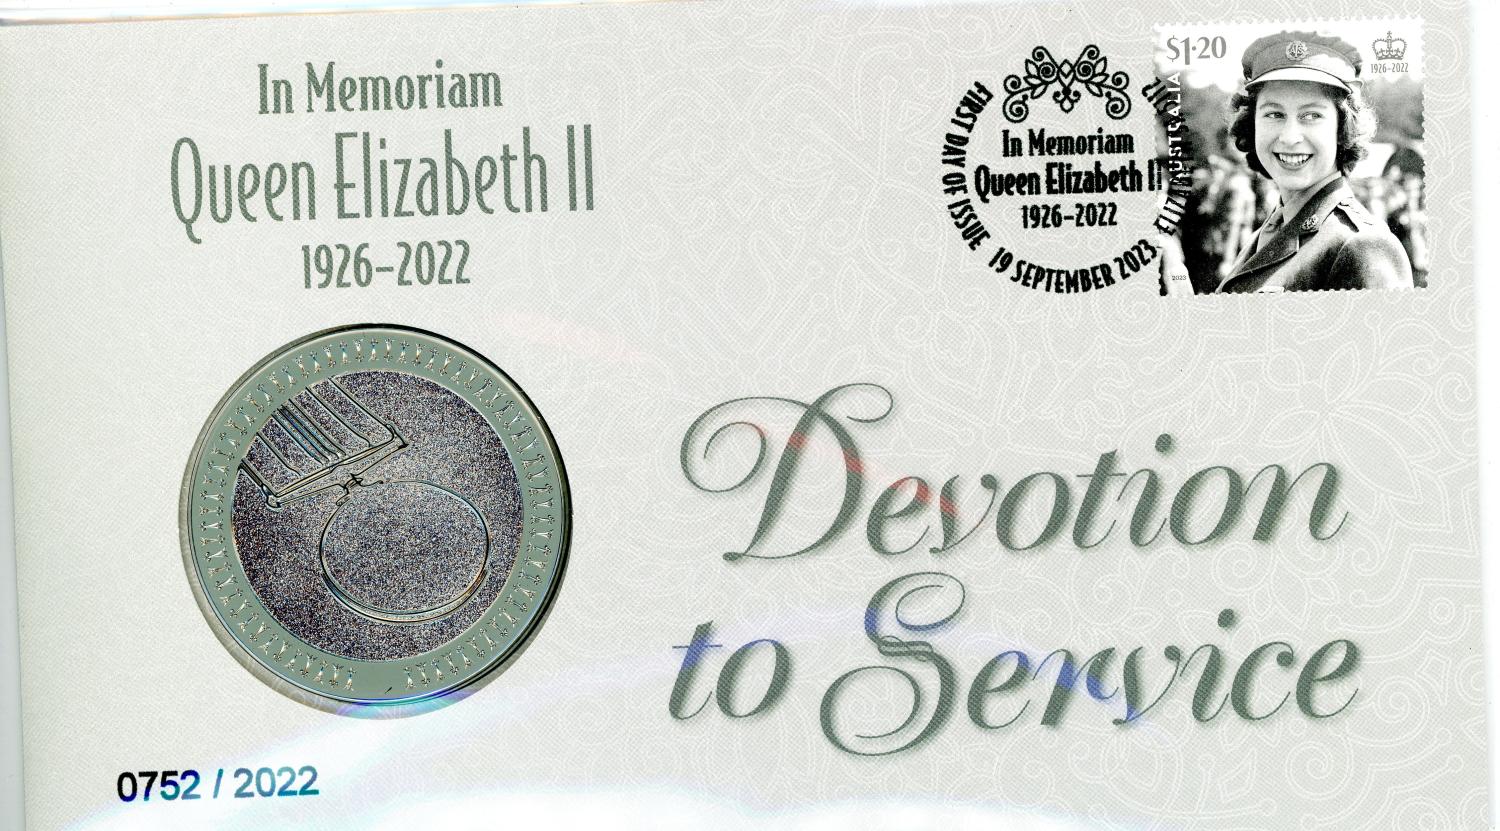 Thumbnail for 2023 In Memoriam Queen Elizabeth II 1926-2022 Devotion to Service Postal Medallion Cover